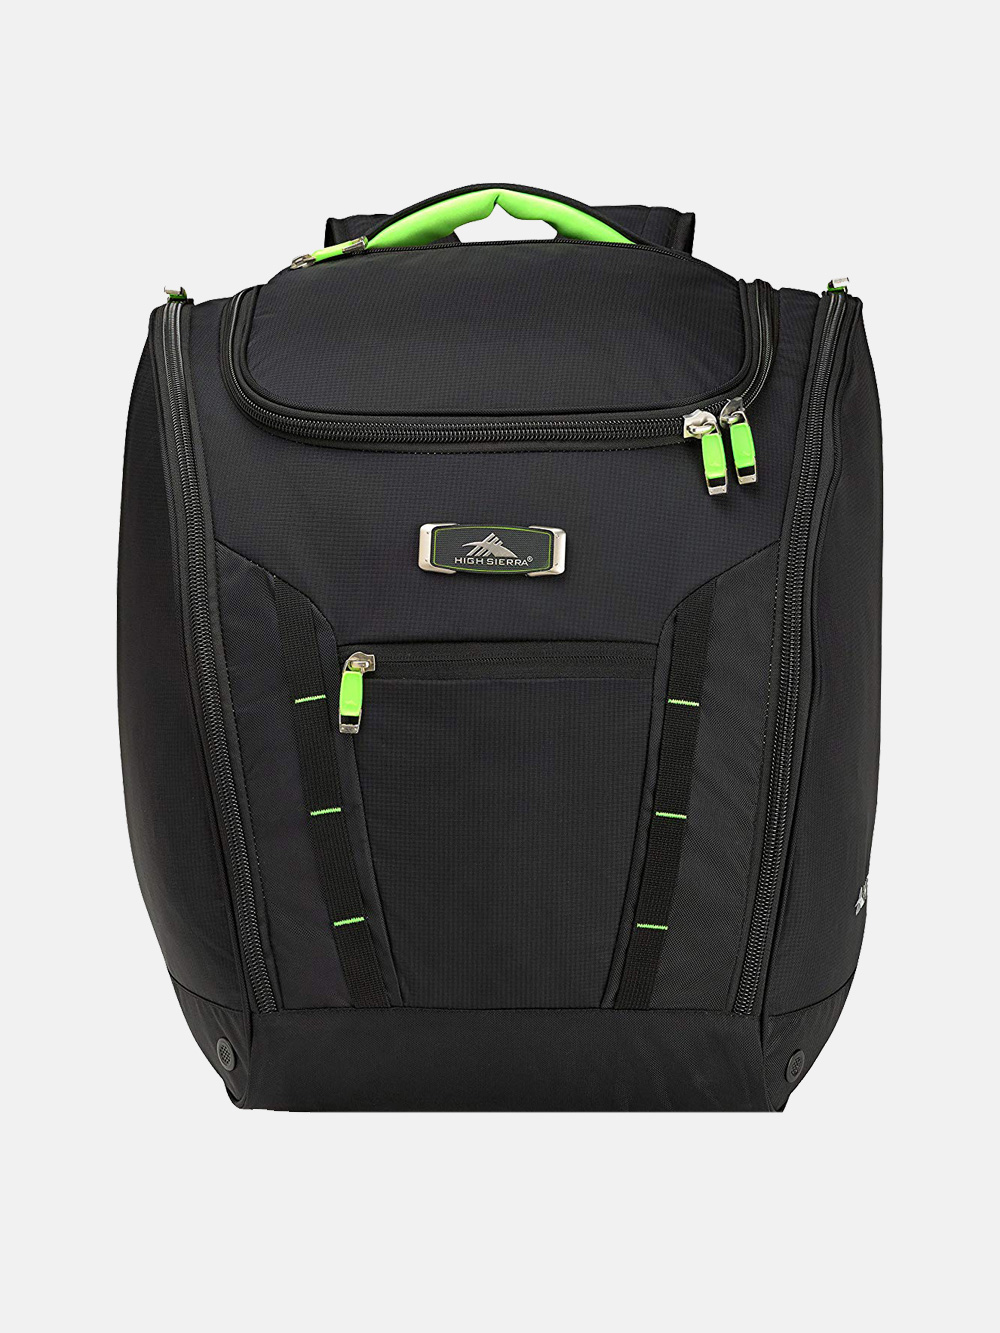 Lacoste Men's Nh2102ne Cross-Body Bag